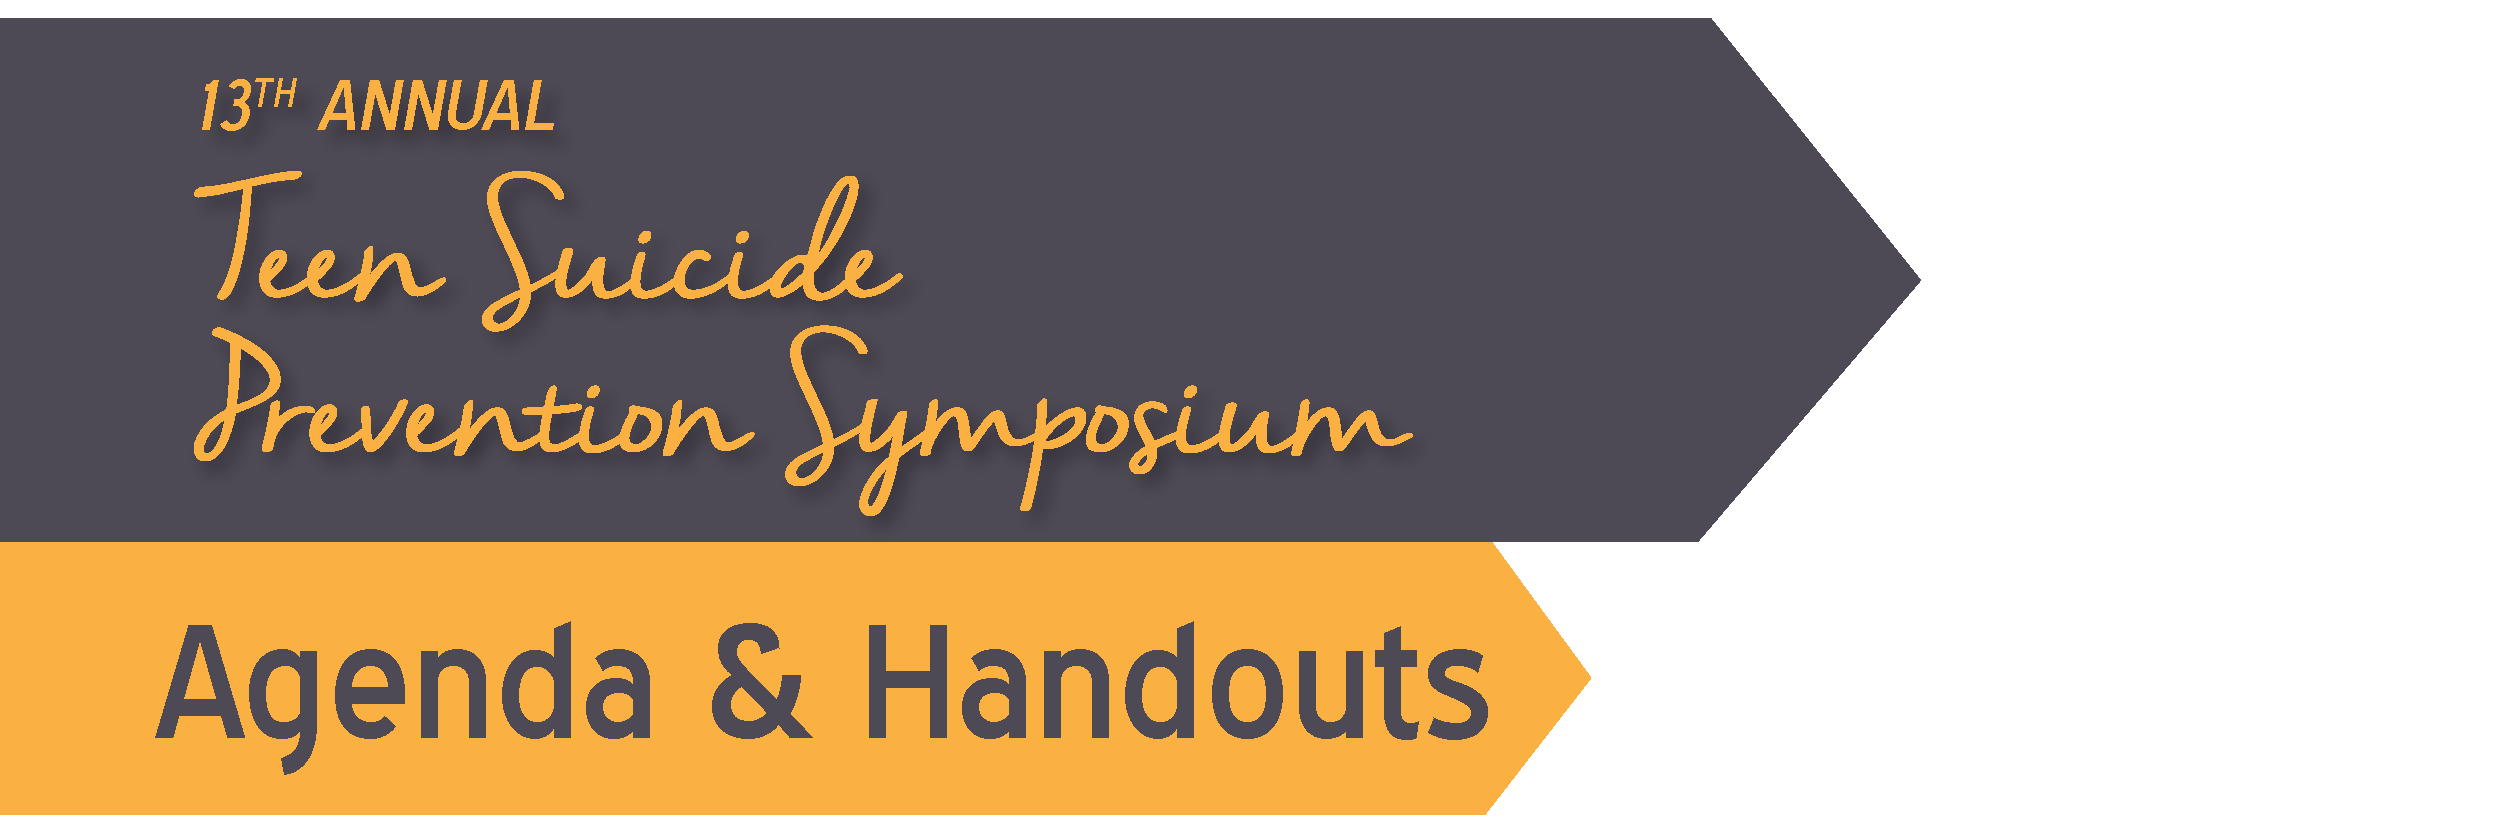 13th Annual Teen Suicide Prevention Symposium Agenda & Handouts